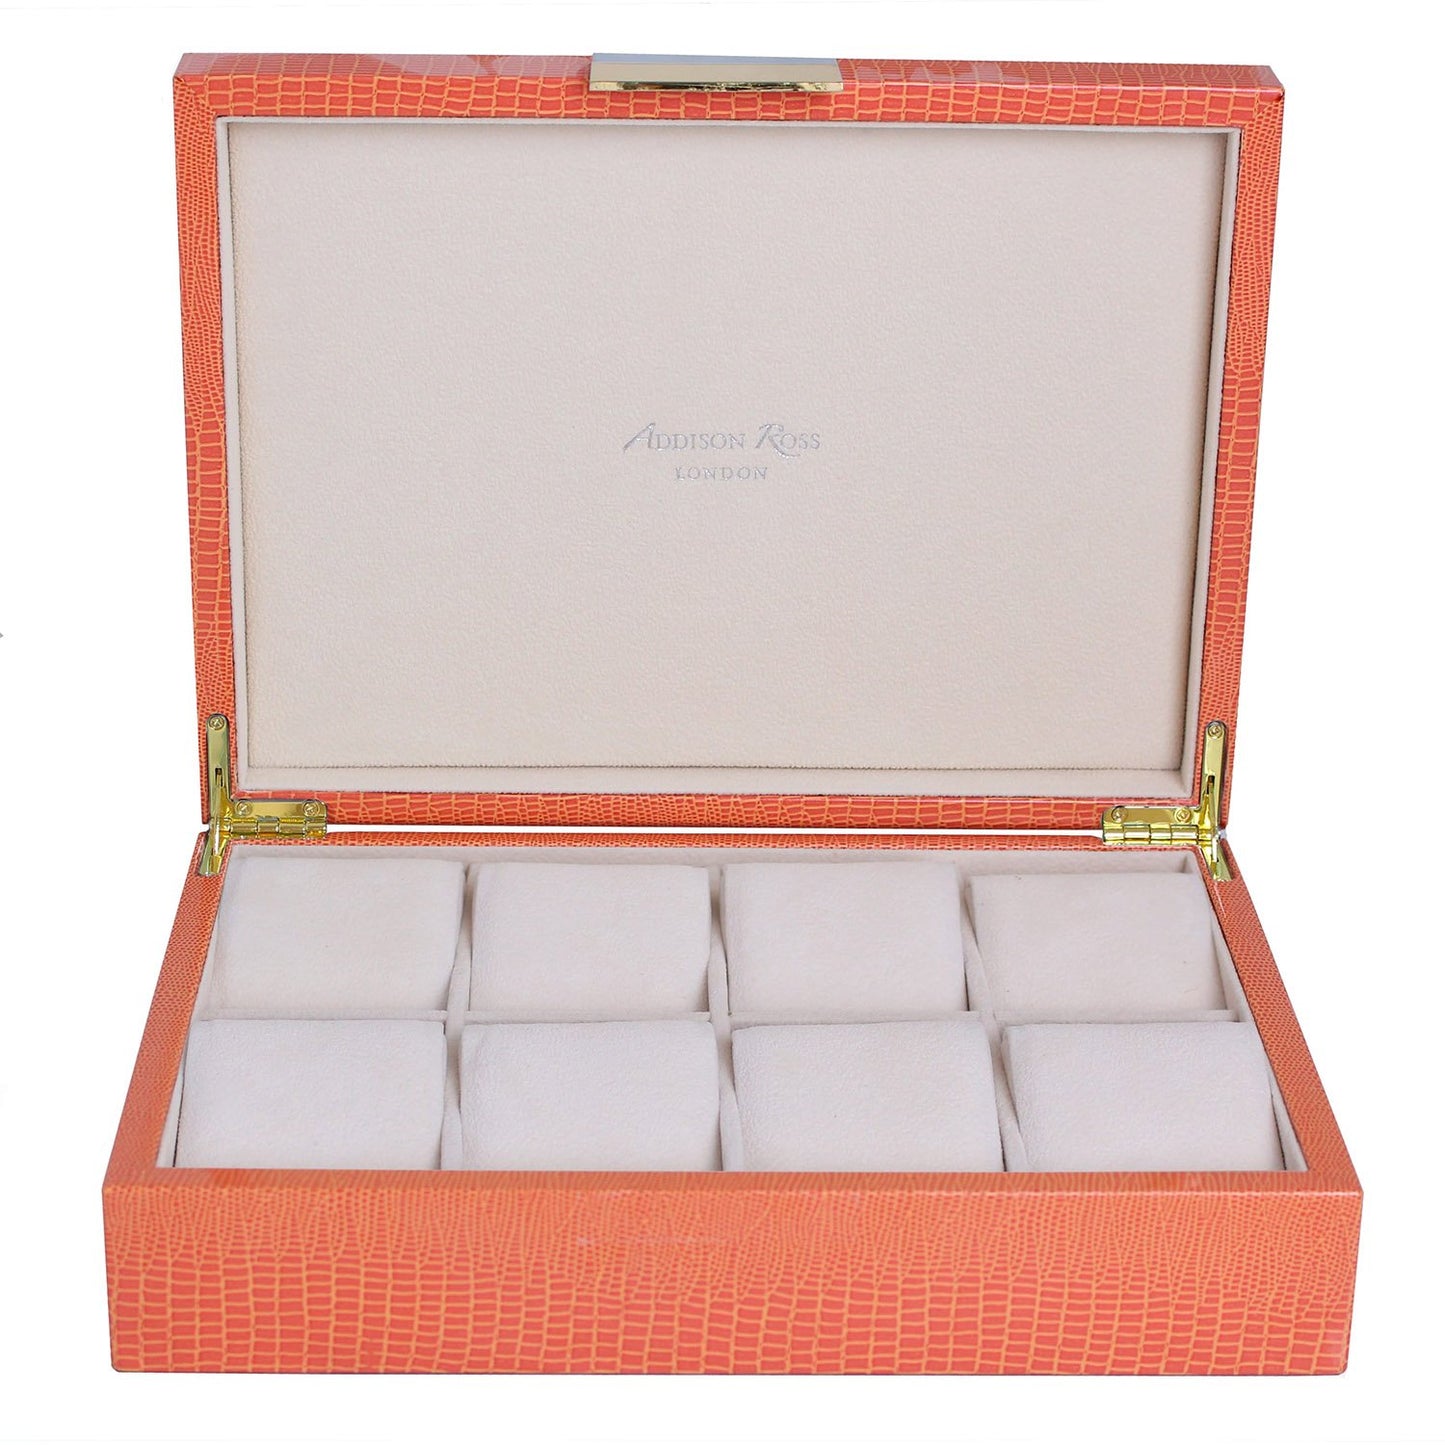 Large orange watch box with cream suede interior